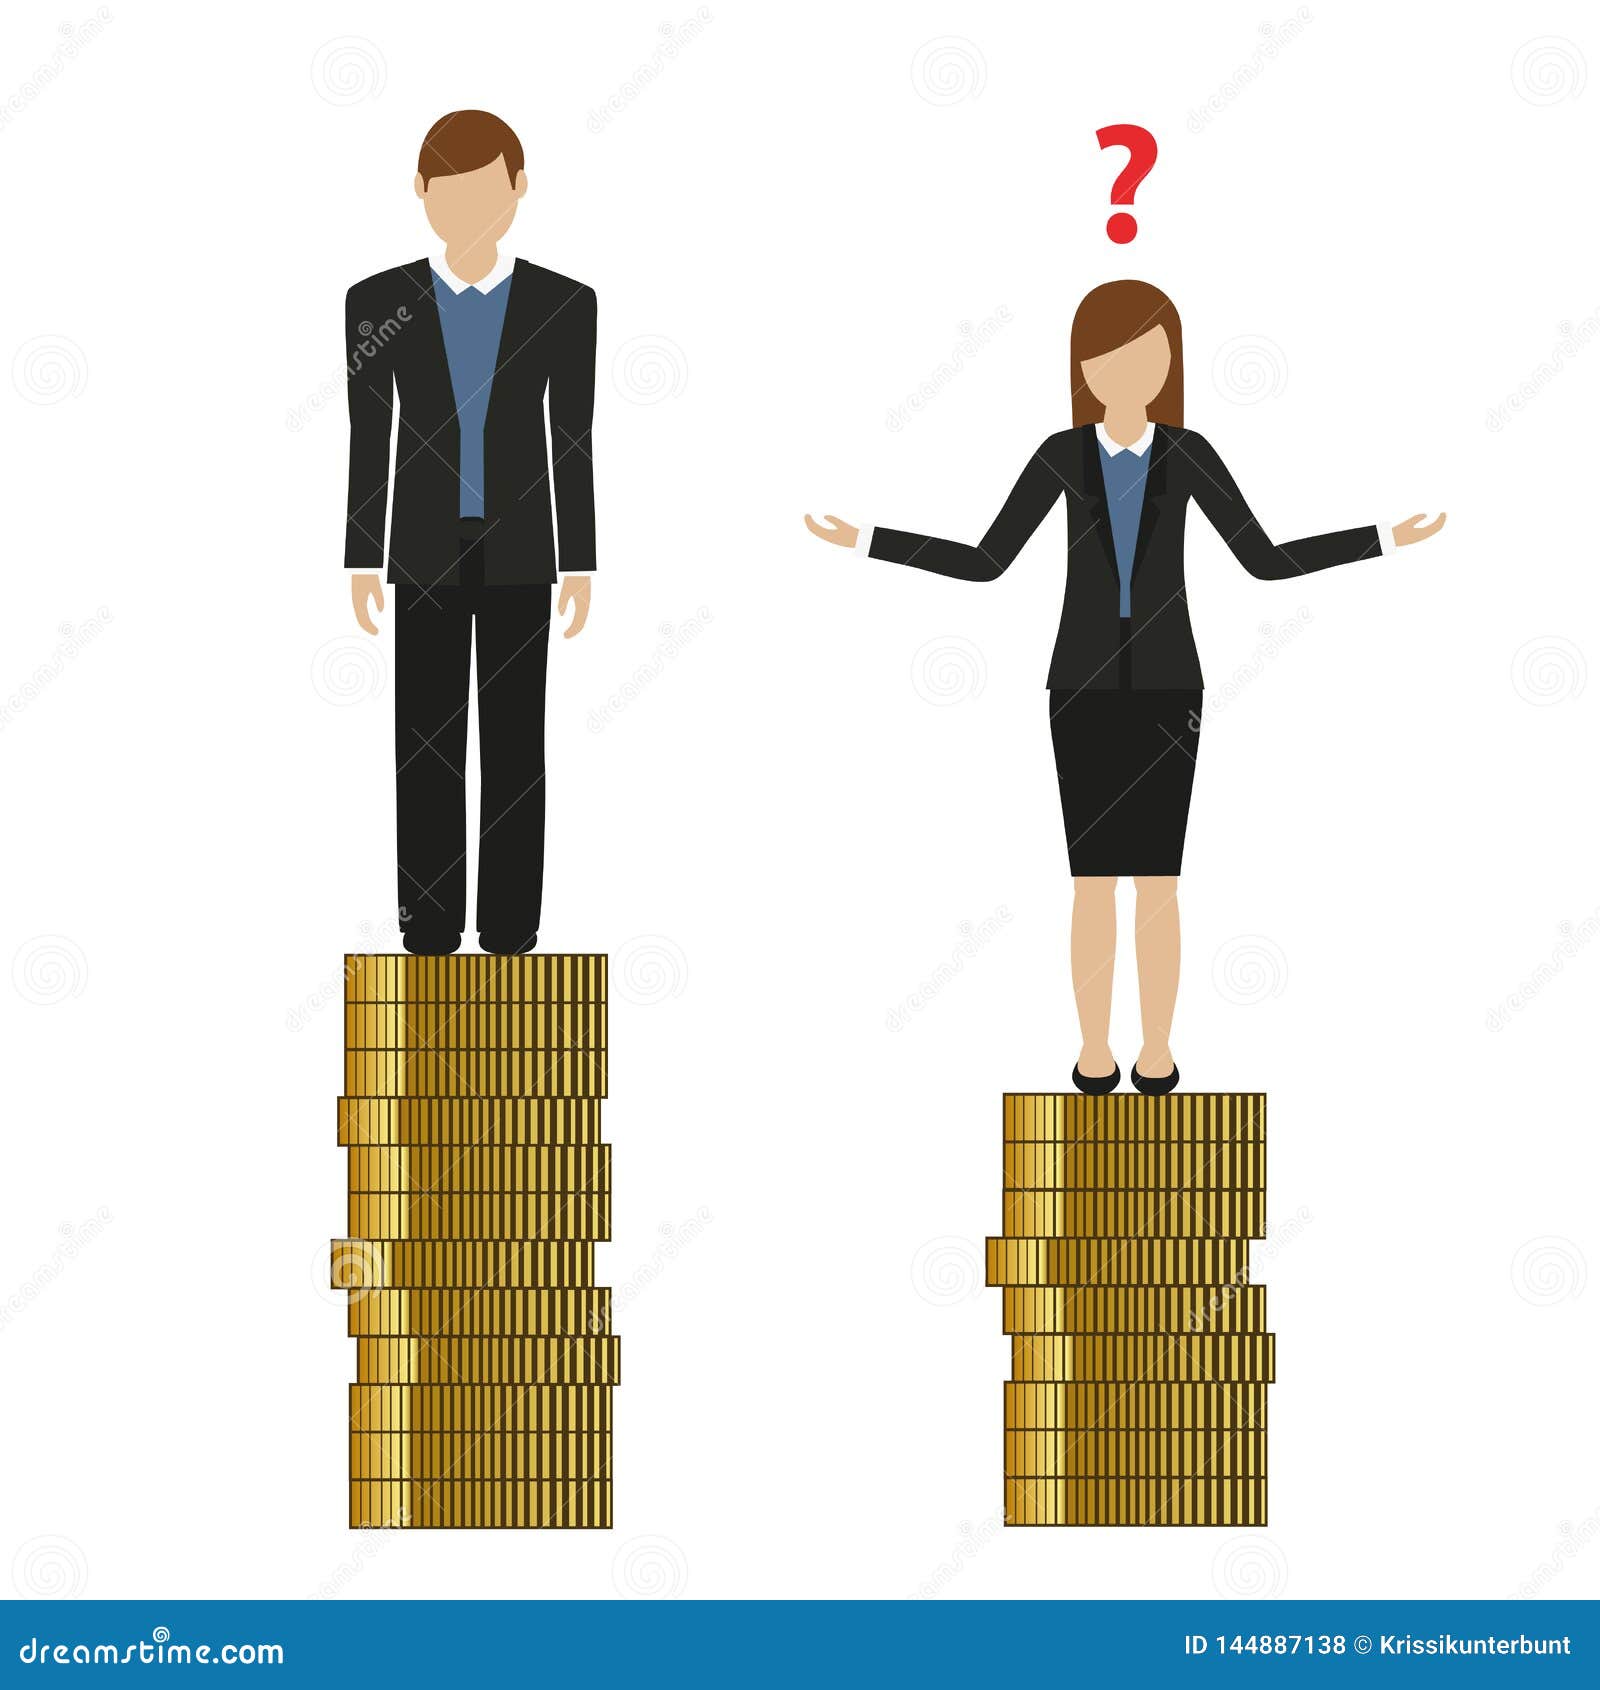 woman earns less money than man discriminates